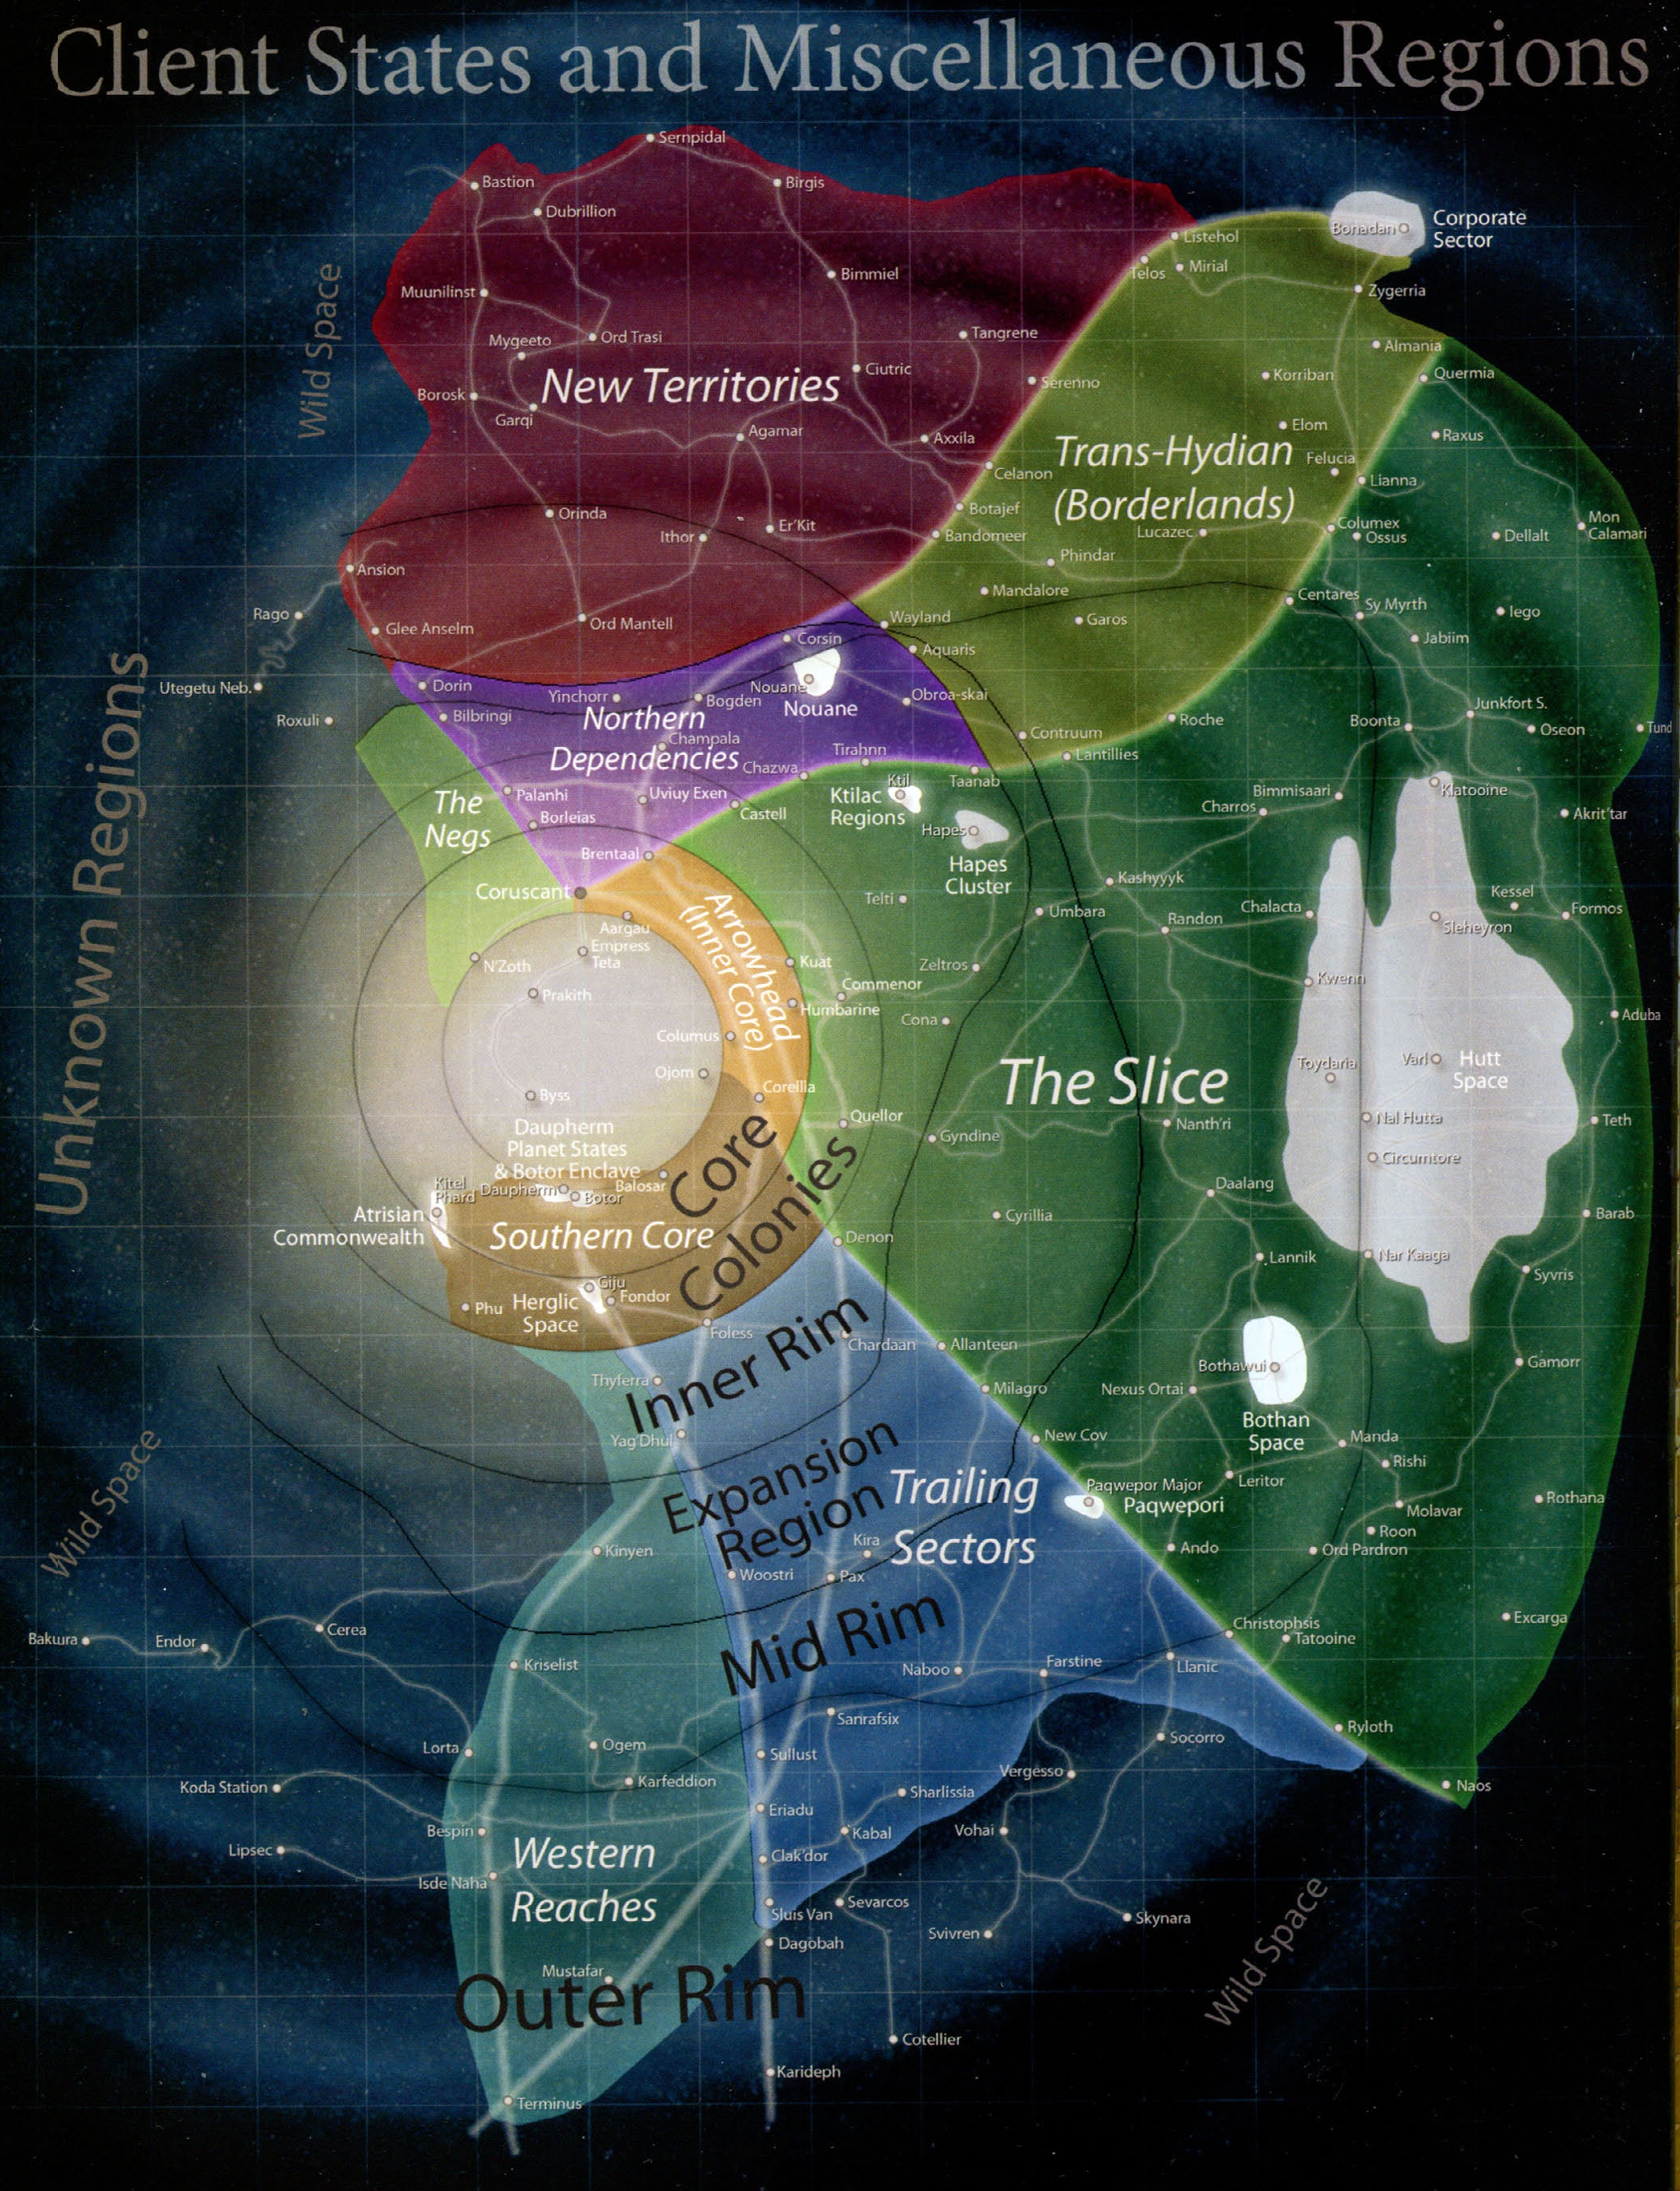 star wars the old republic galaxy map